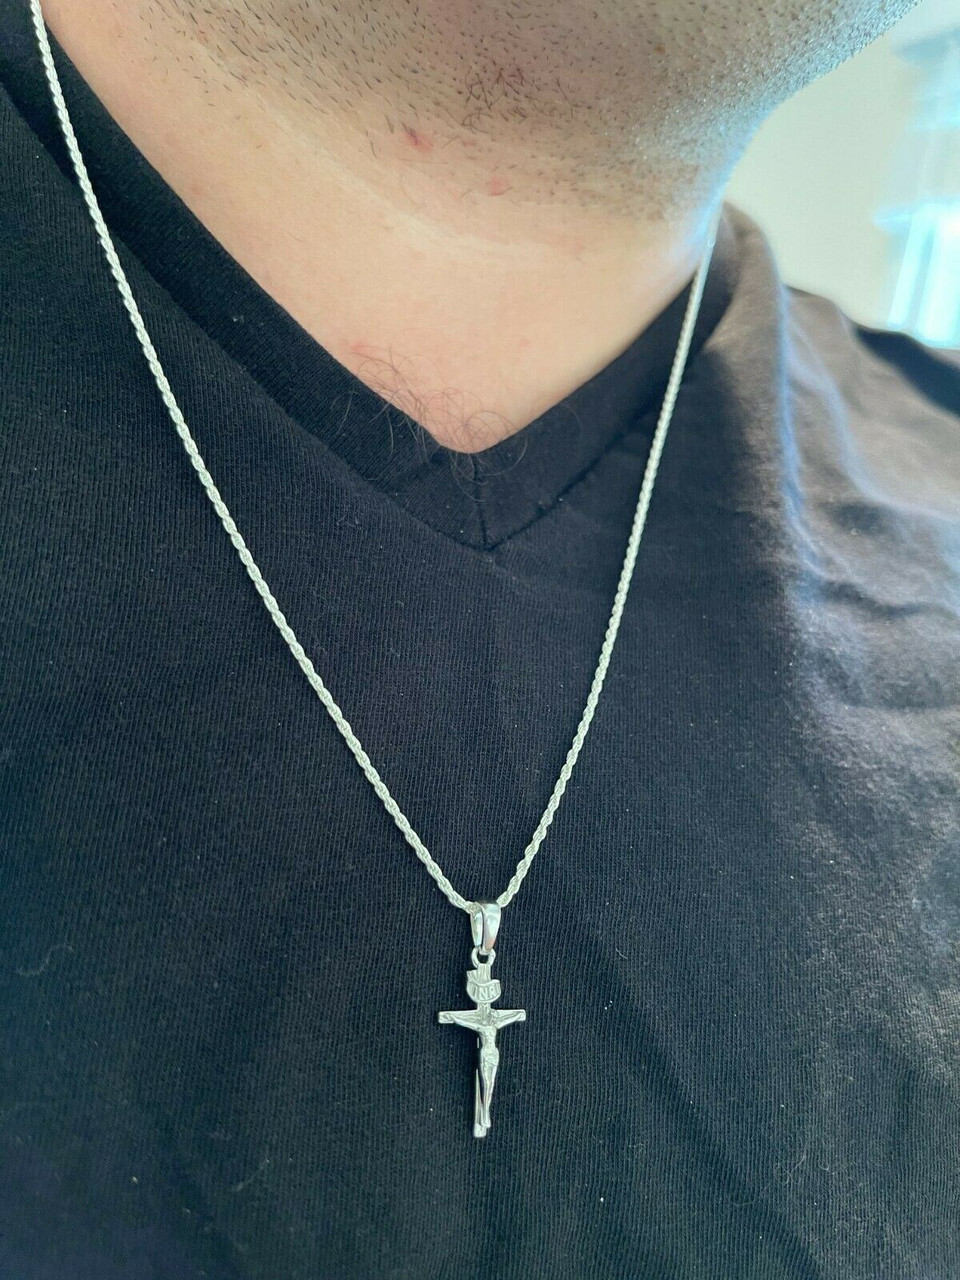 Men's Silver Cross Pendant Necklace - Men's Silver Necklace